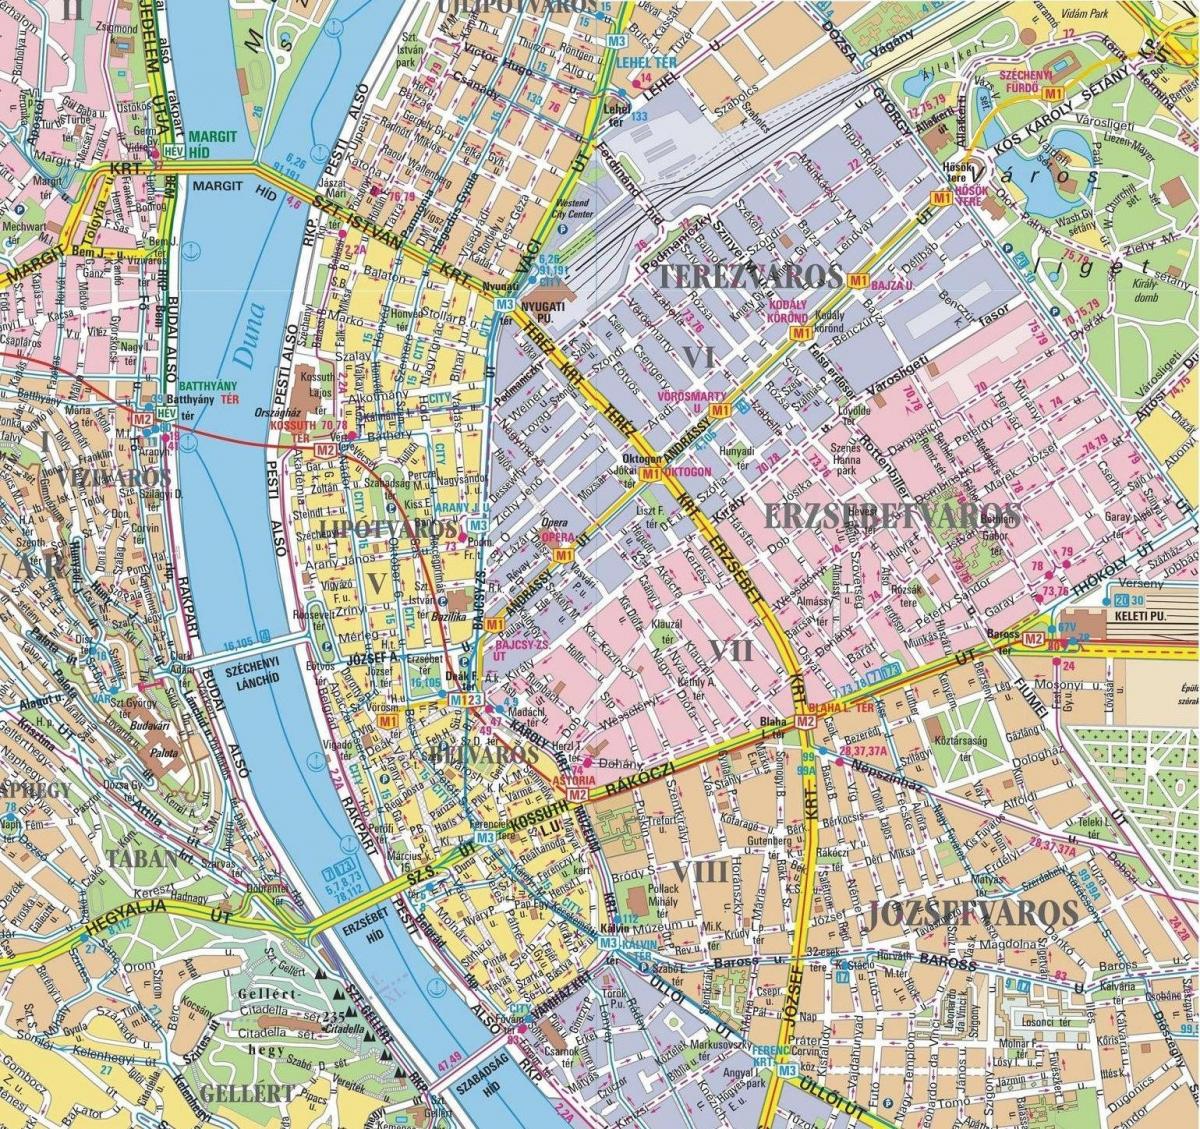 Budapeşte'de ilçe haritası 